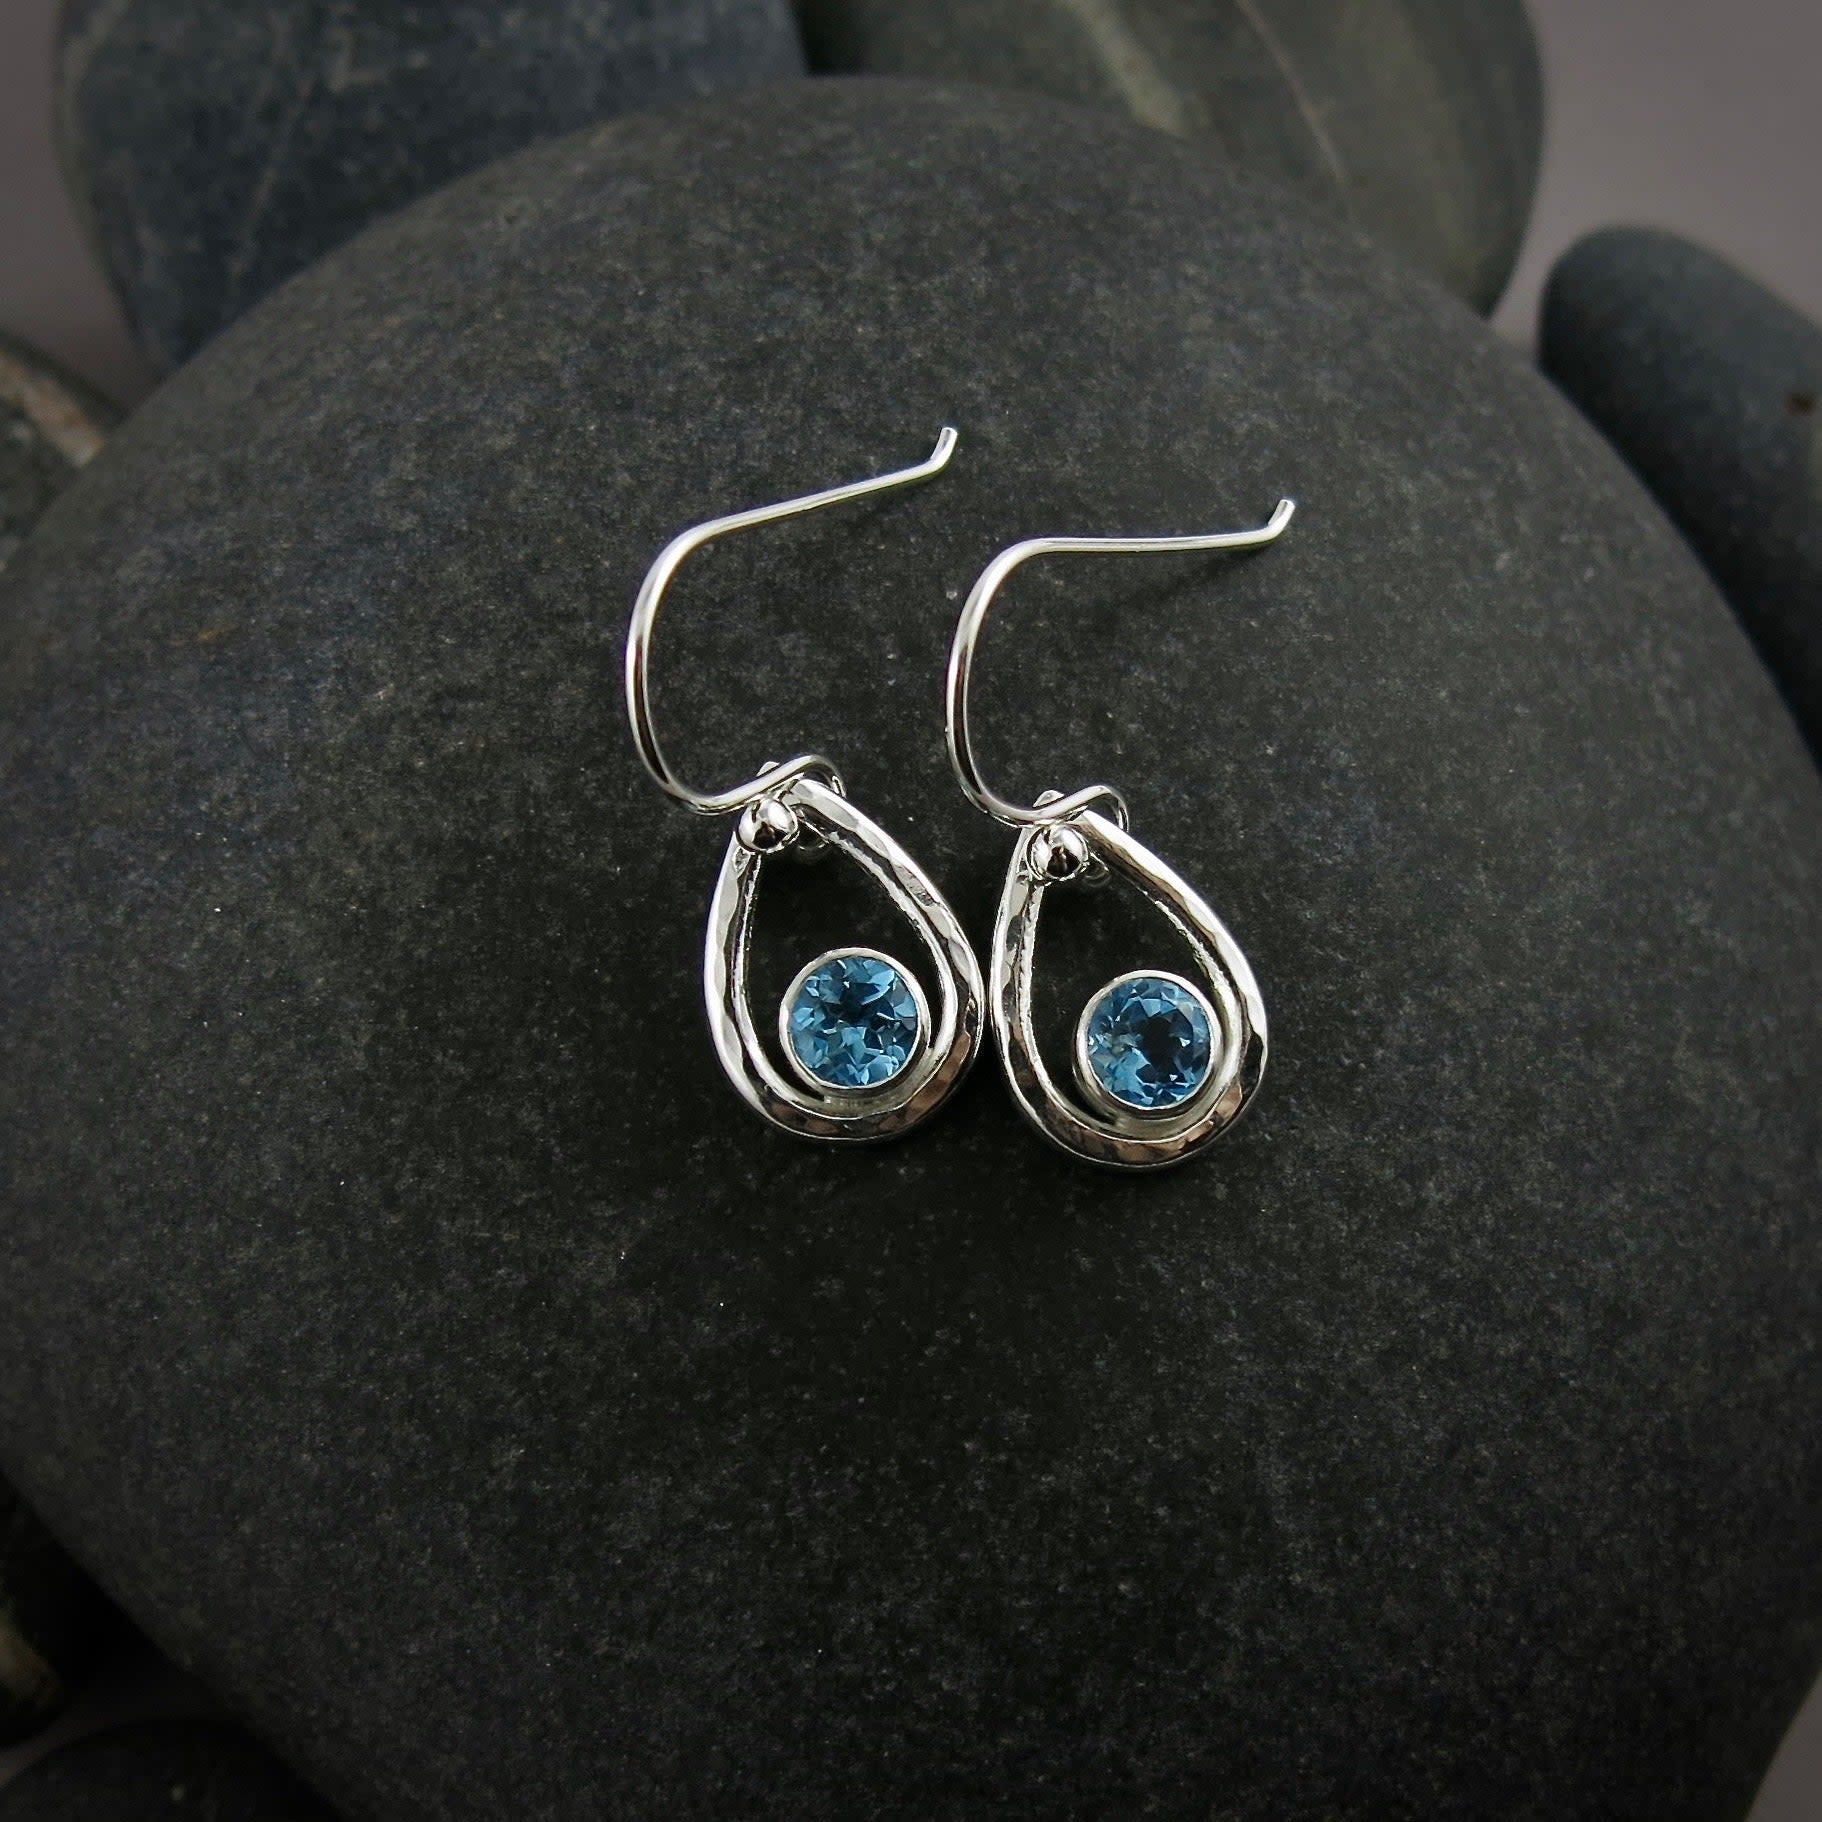 Mikel Grant Jewelry Earrings - Blue Topaz Raindrop Sterling Silver